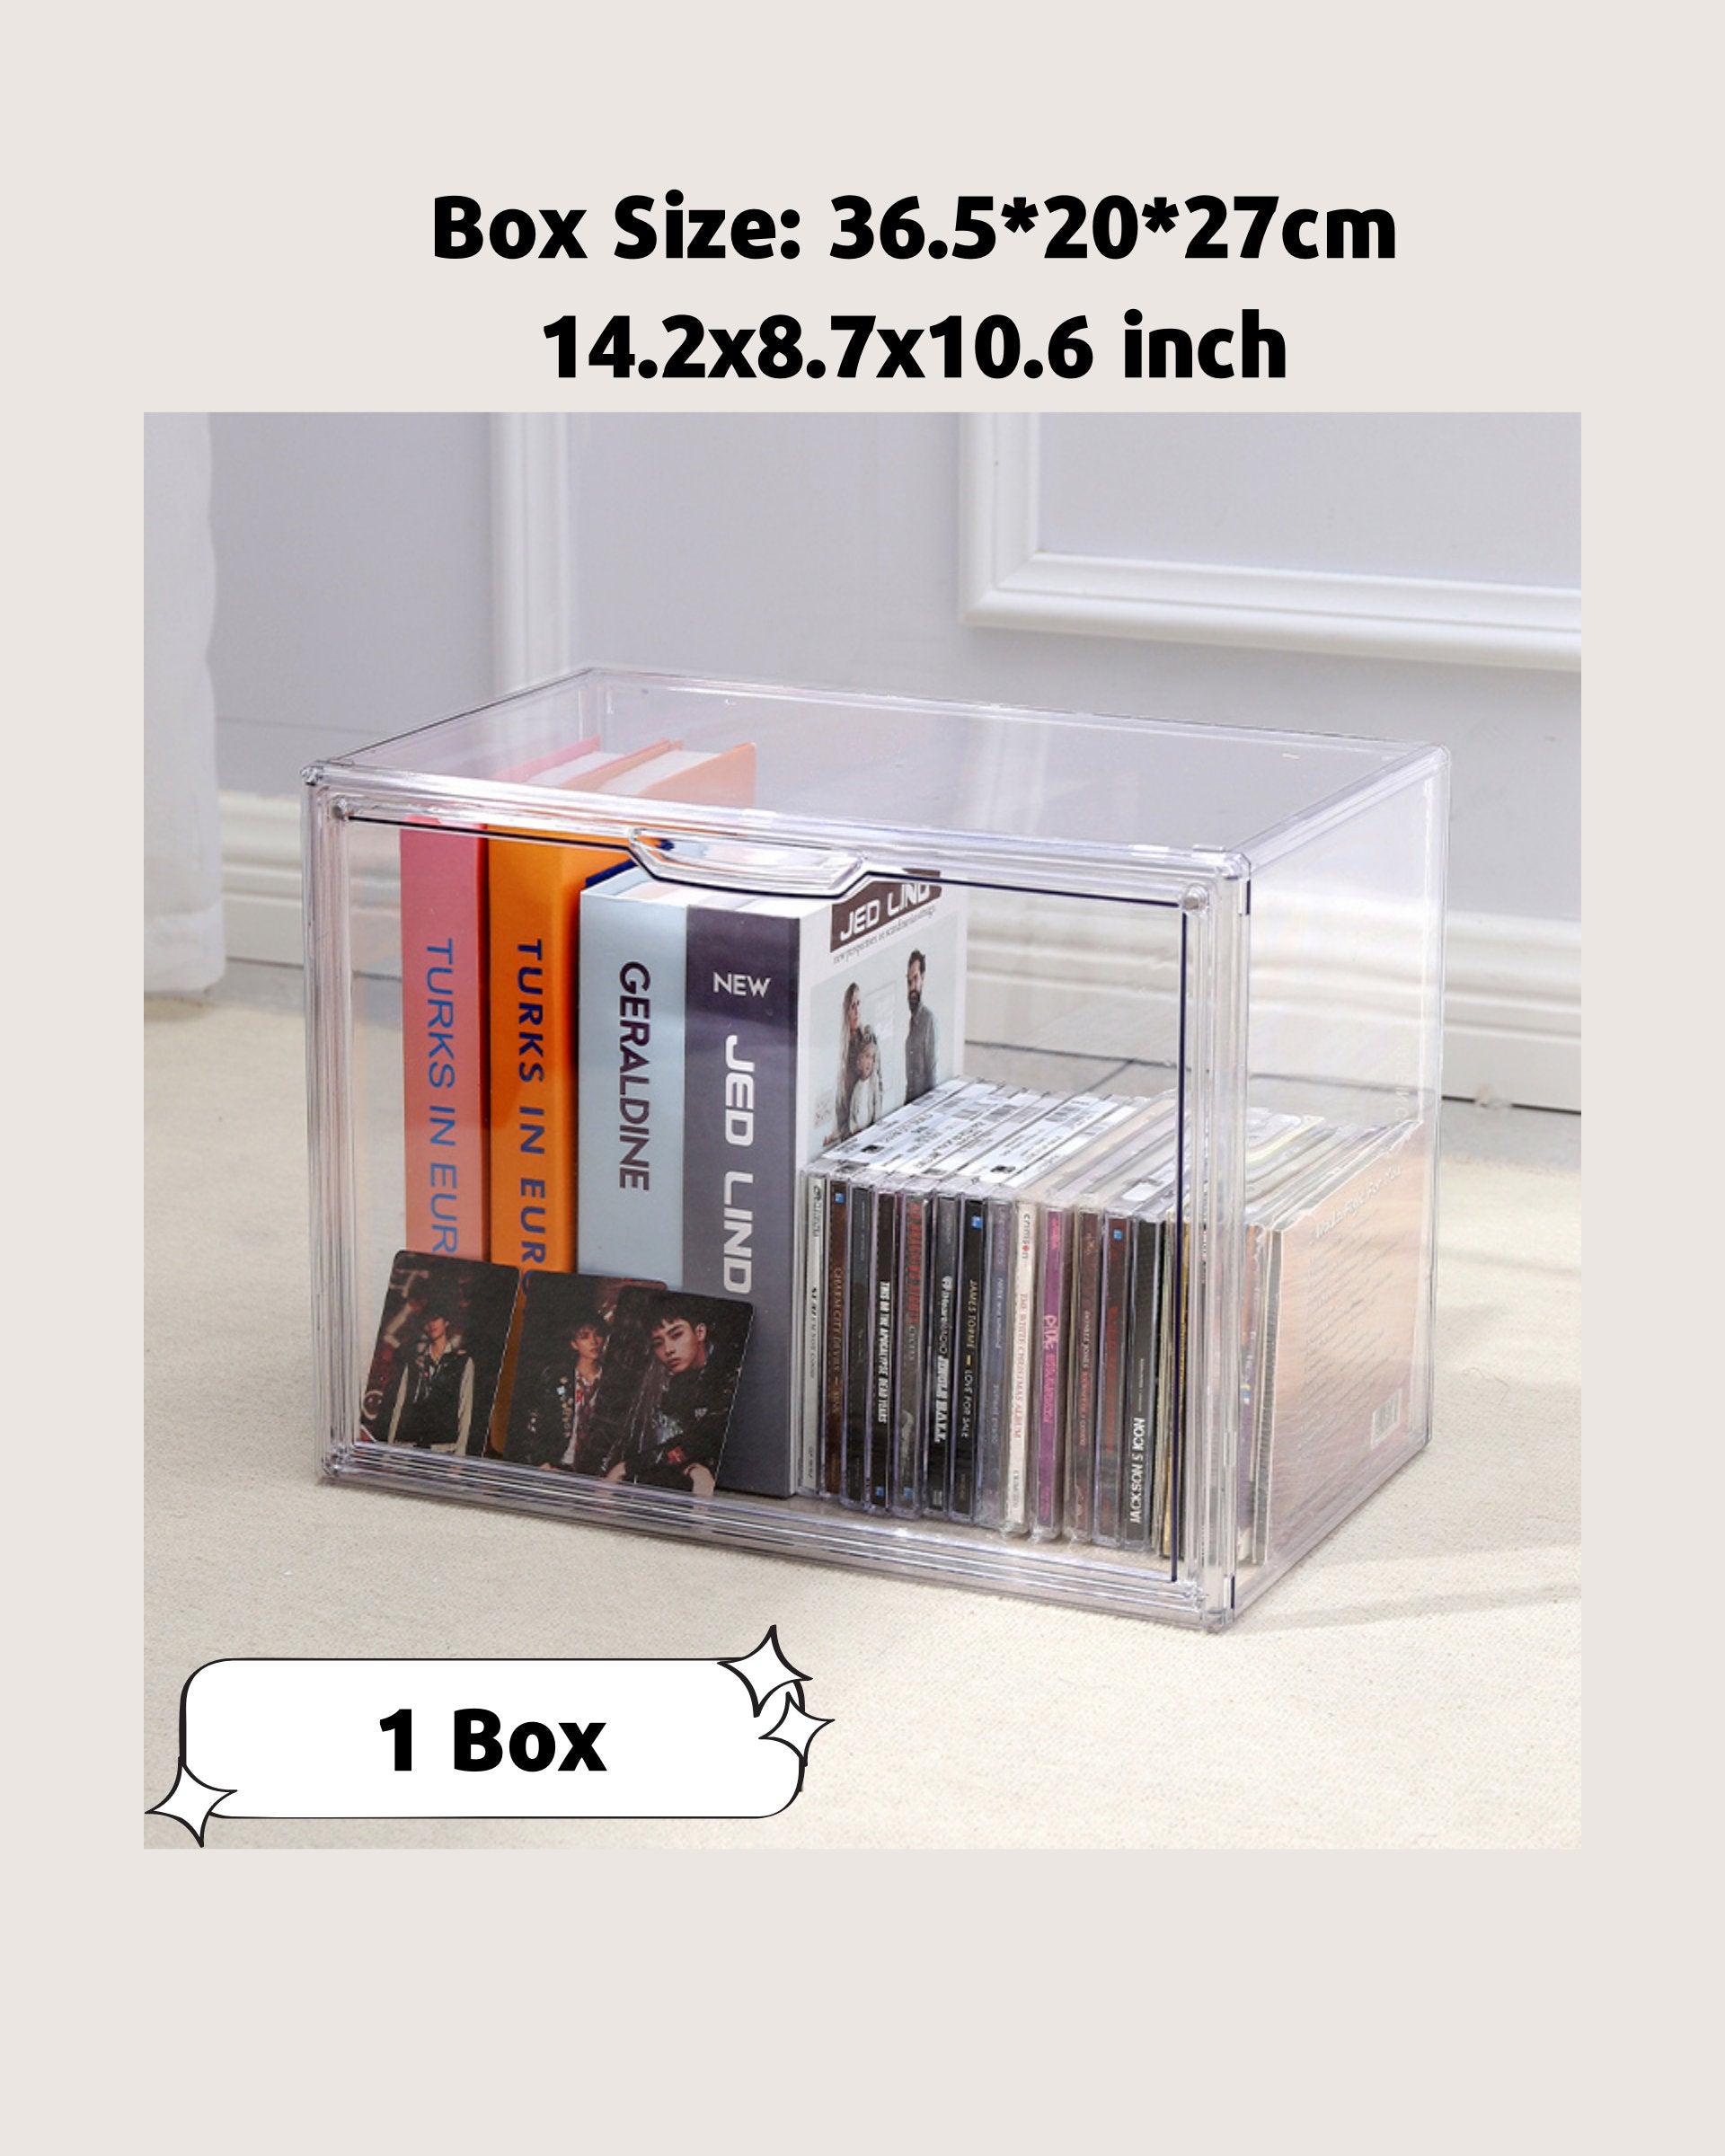 Premium Acrylic Kpop Album CD Display Case | Stackable Clear Dustproof Large Capacity Box Kpop Storage Organizer with Magnetic Front Door